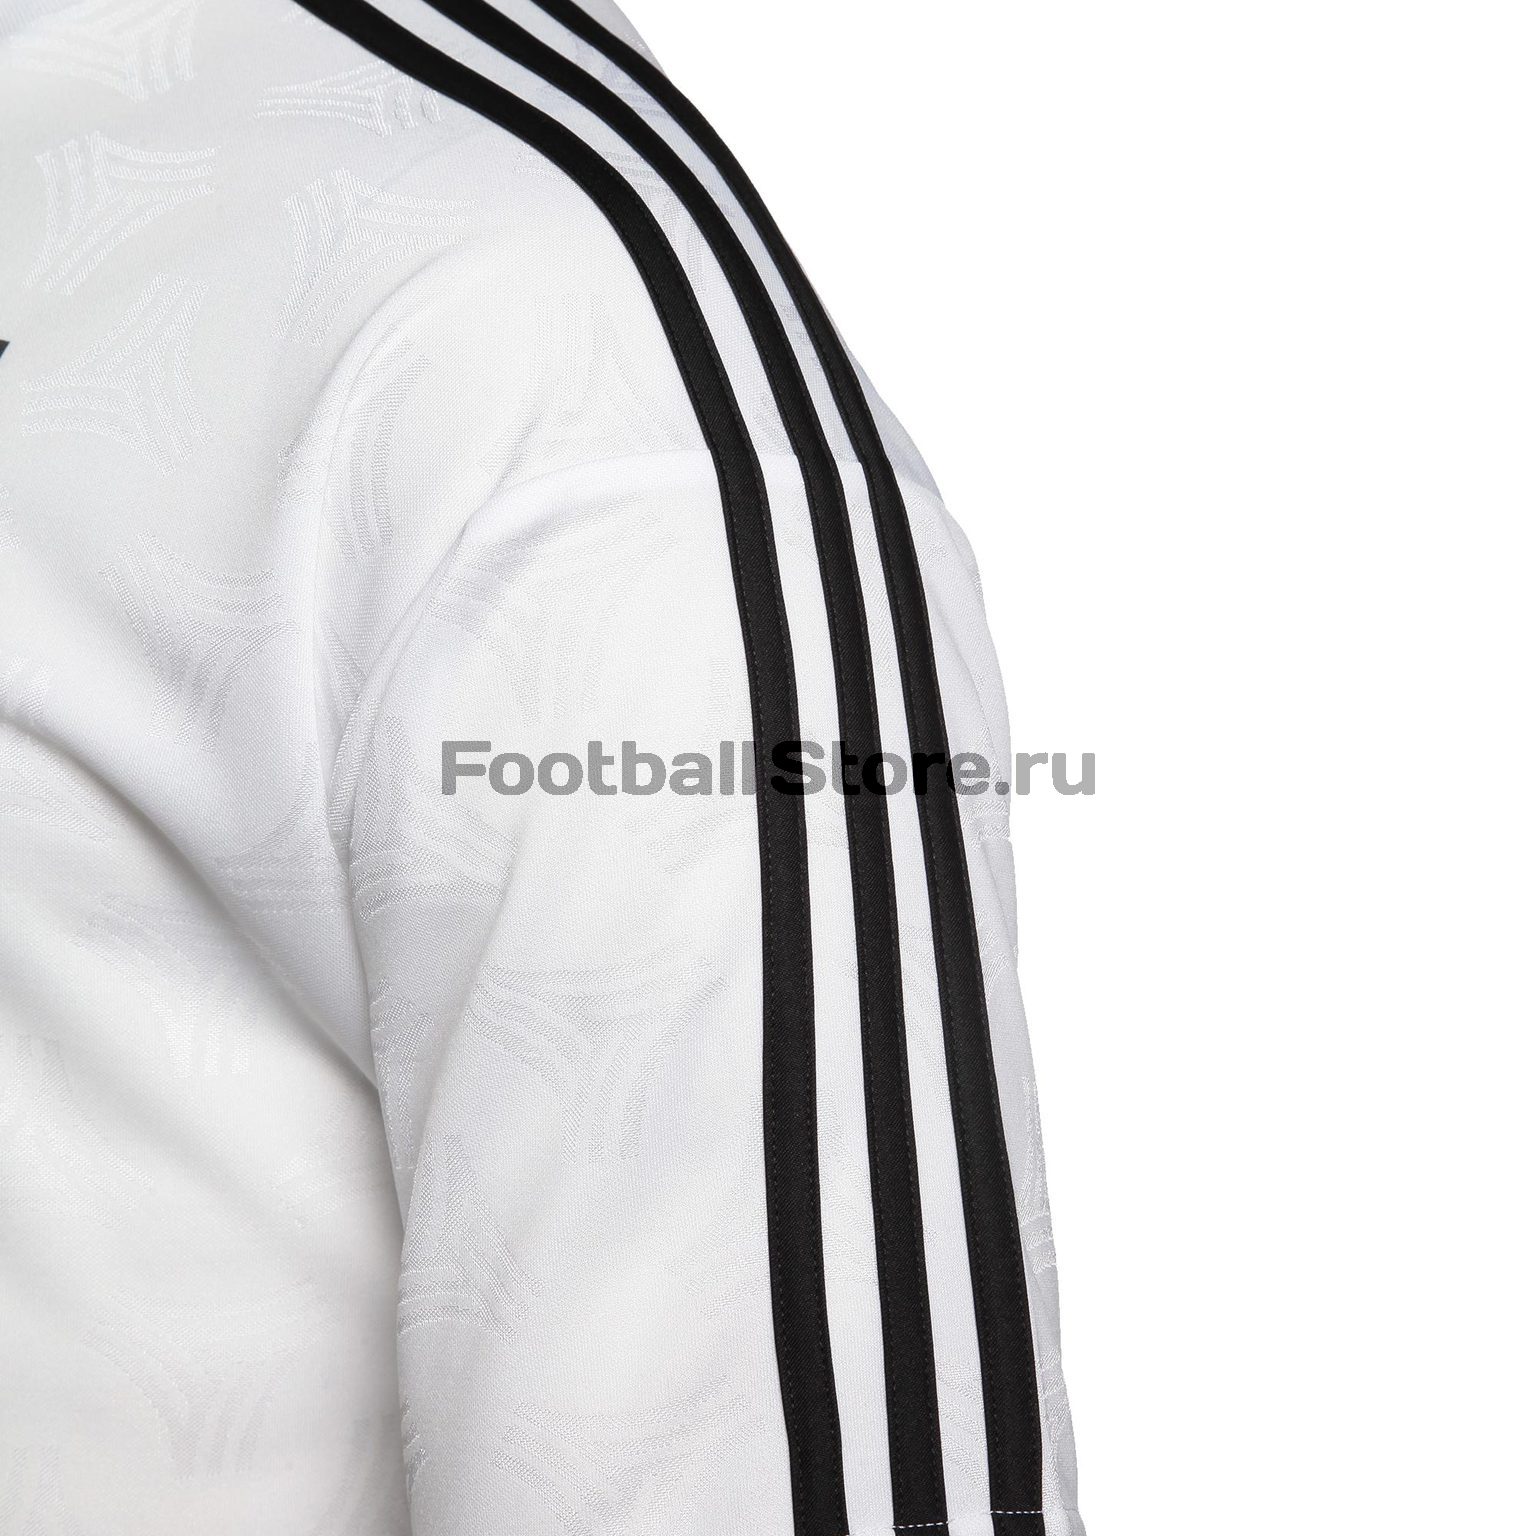 Футболка тренировочная Adidas Tanip Icon JSY CG1801